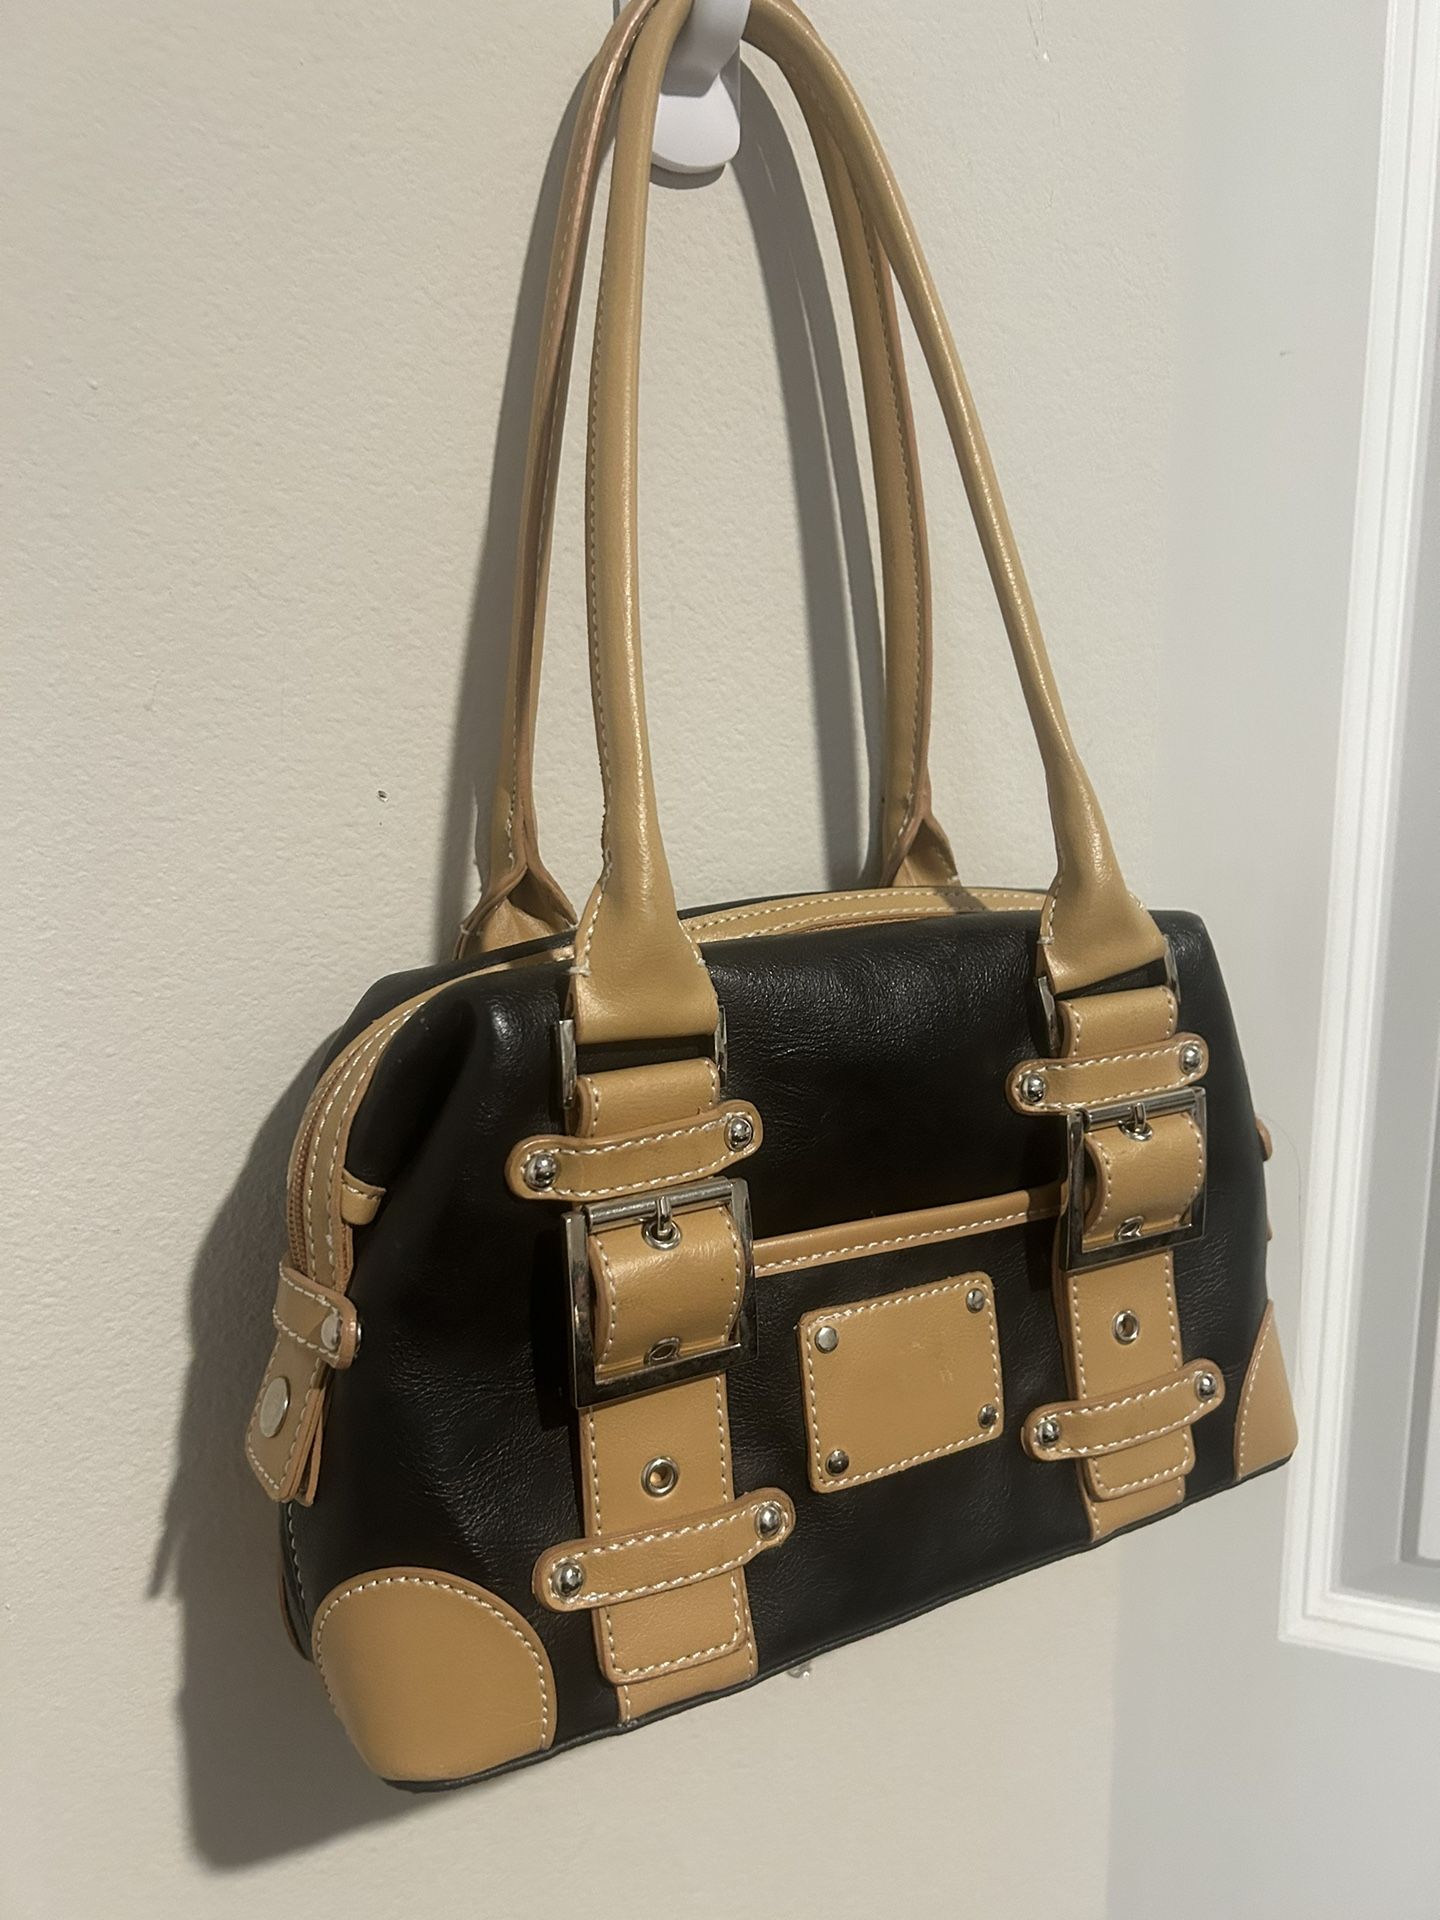 Leather Shell Black clutch purse